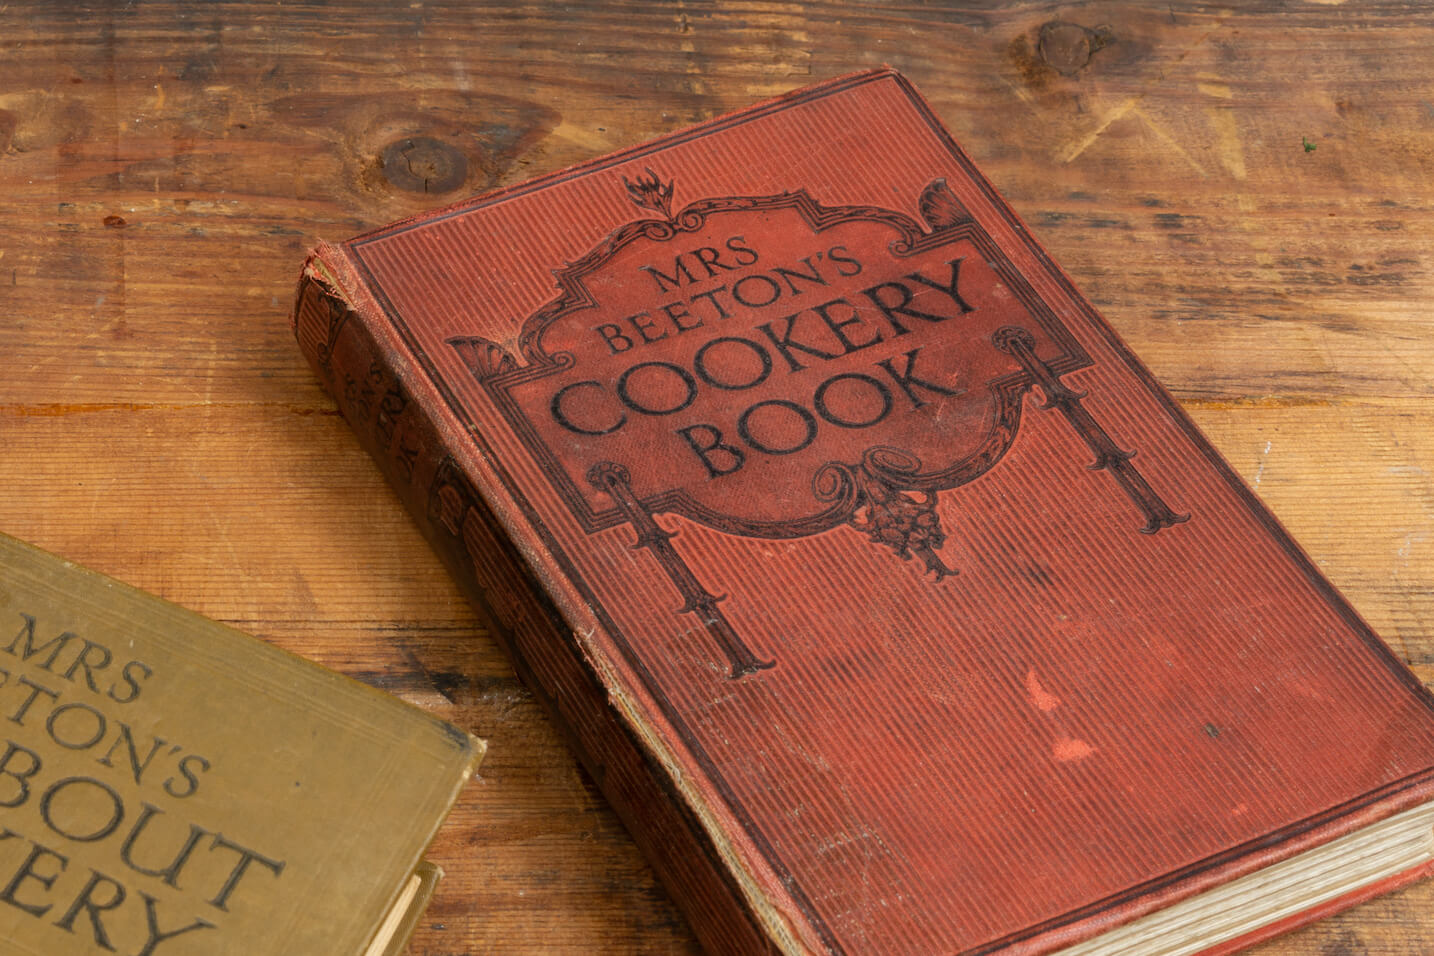 Mrs Beeton's Cookery Books